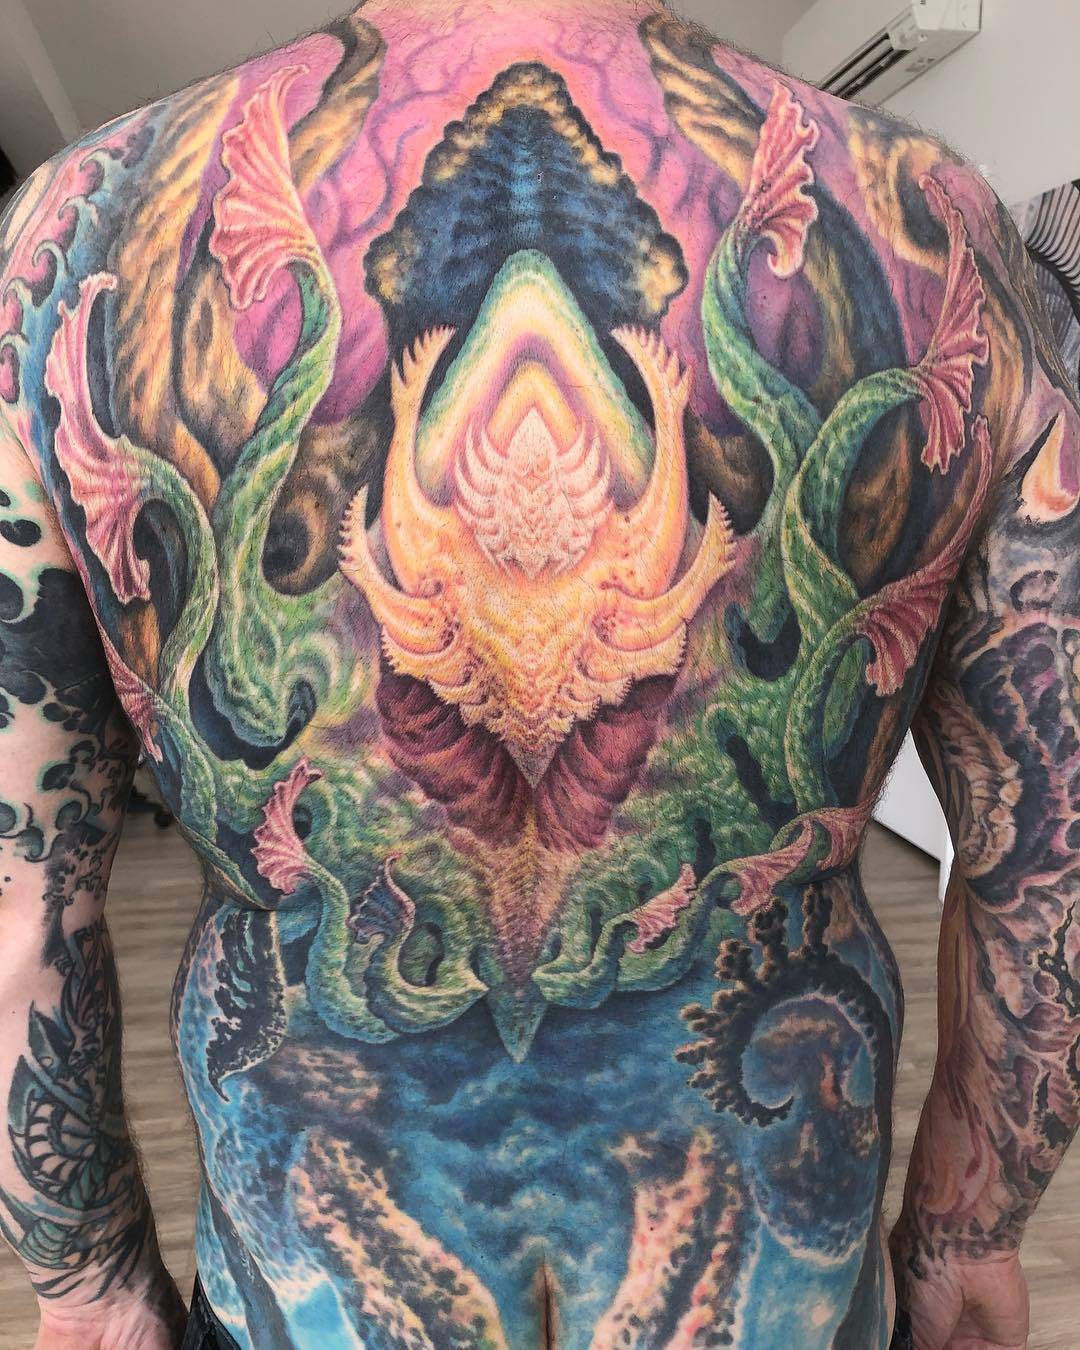 Great Biorganic tattoos by Guy Aitchison